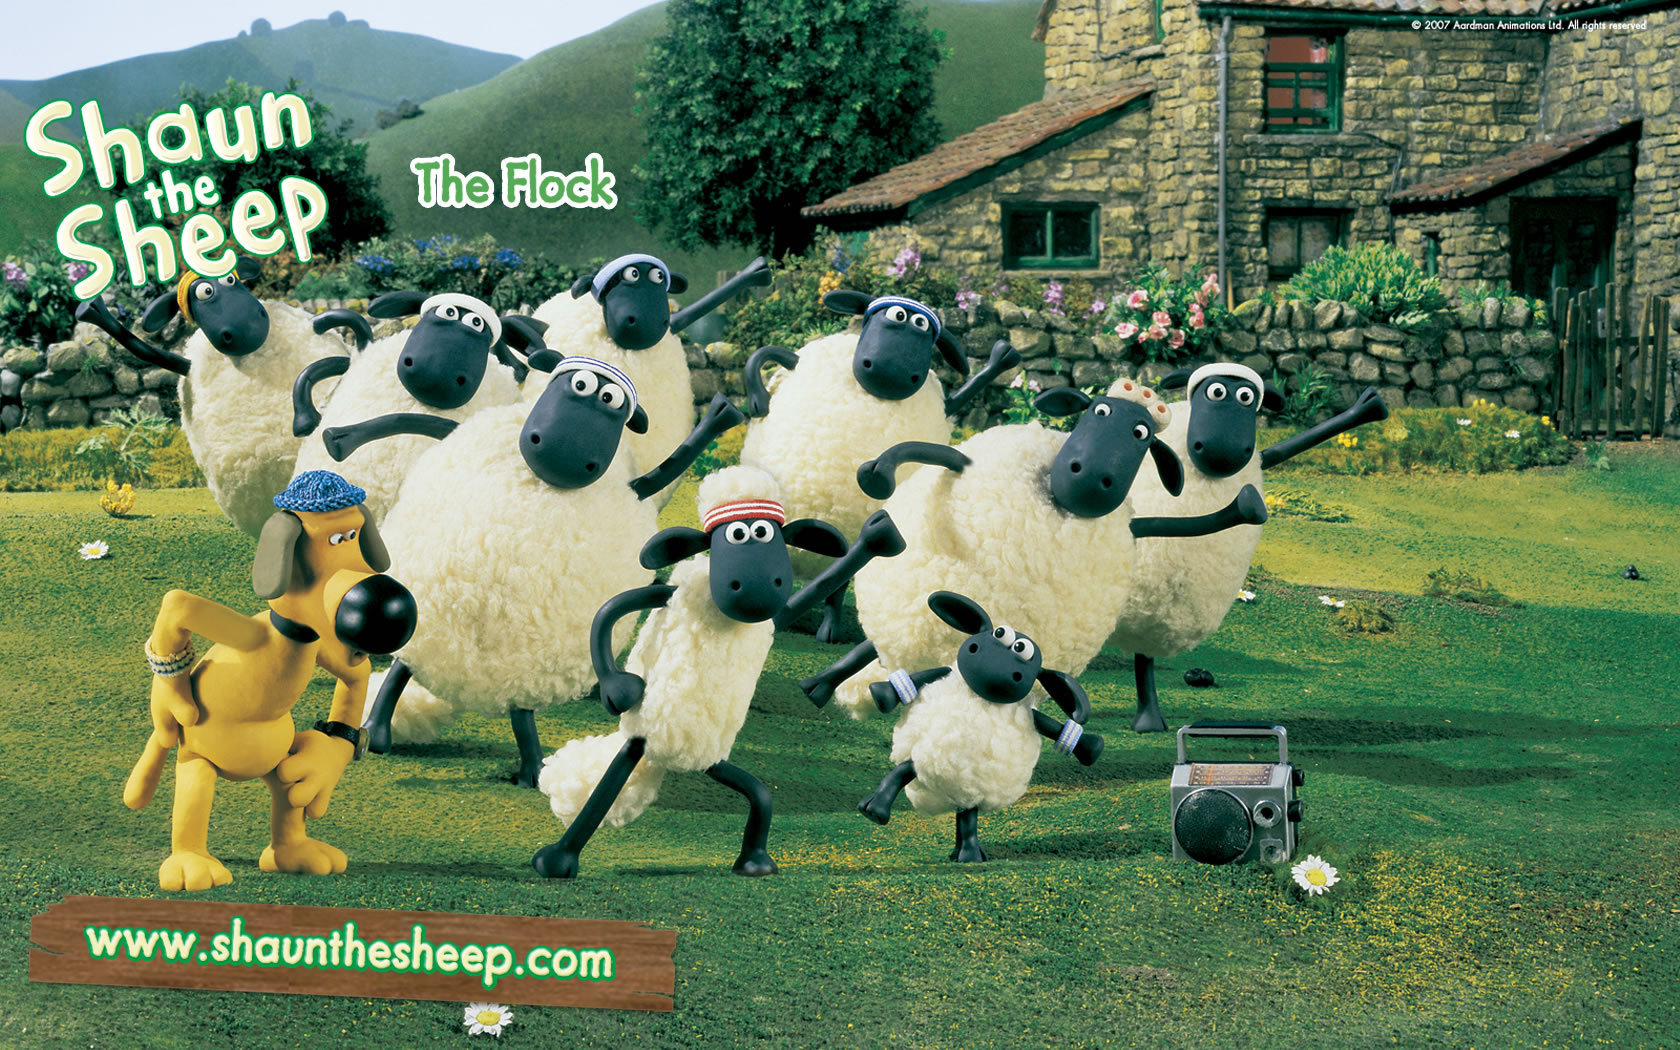 Shaun-the-sheep-shaun-the-sheep-2826701-1680-1050.jpg